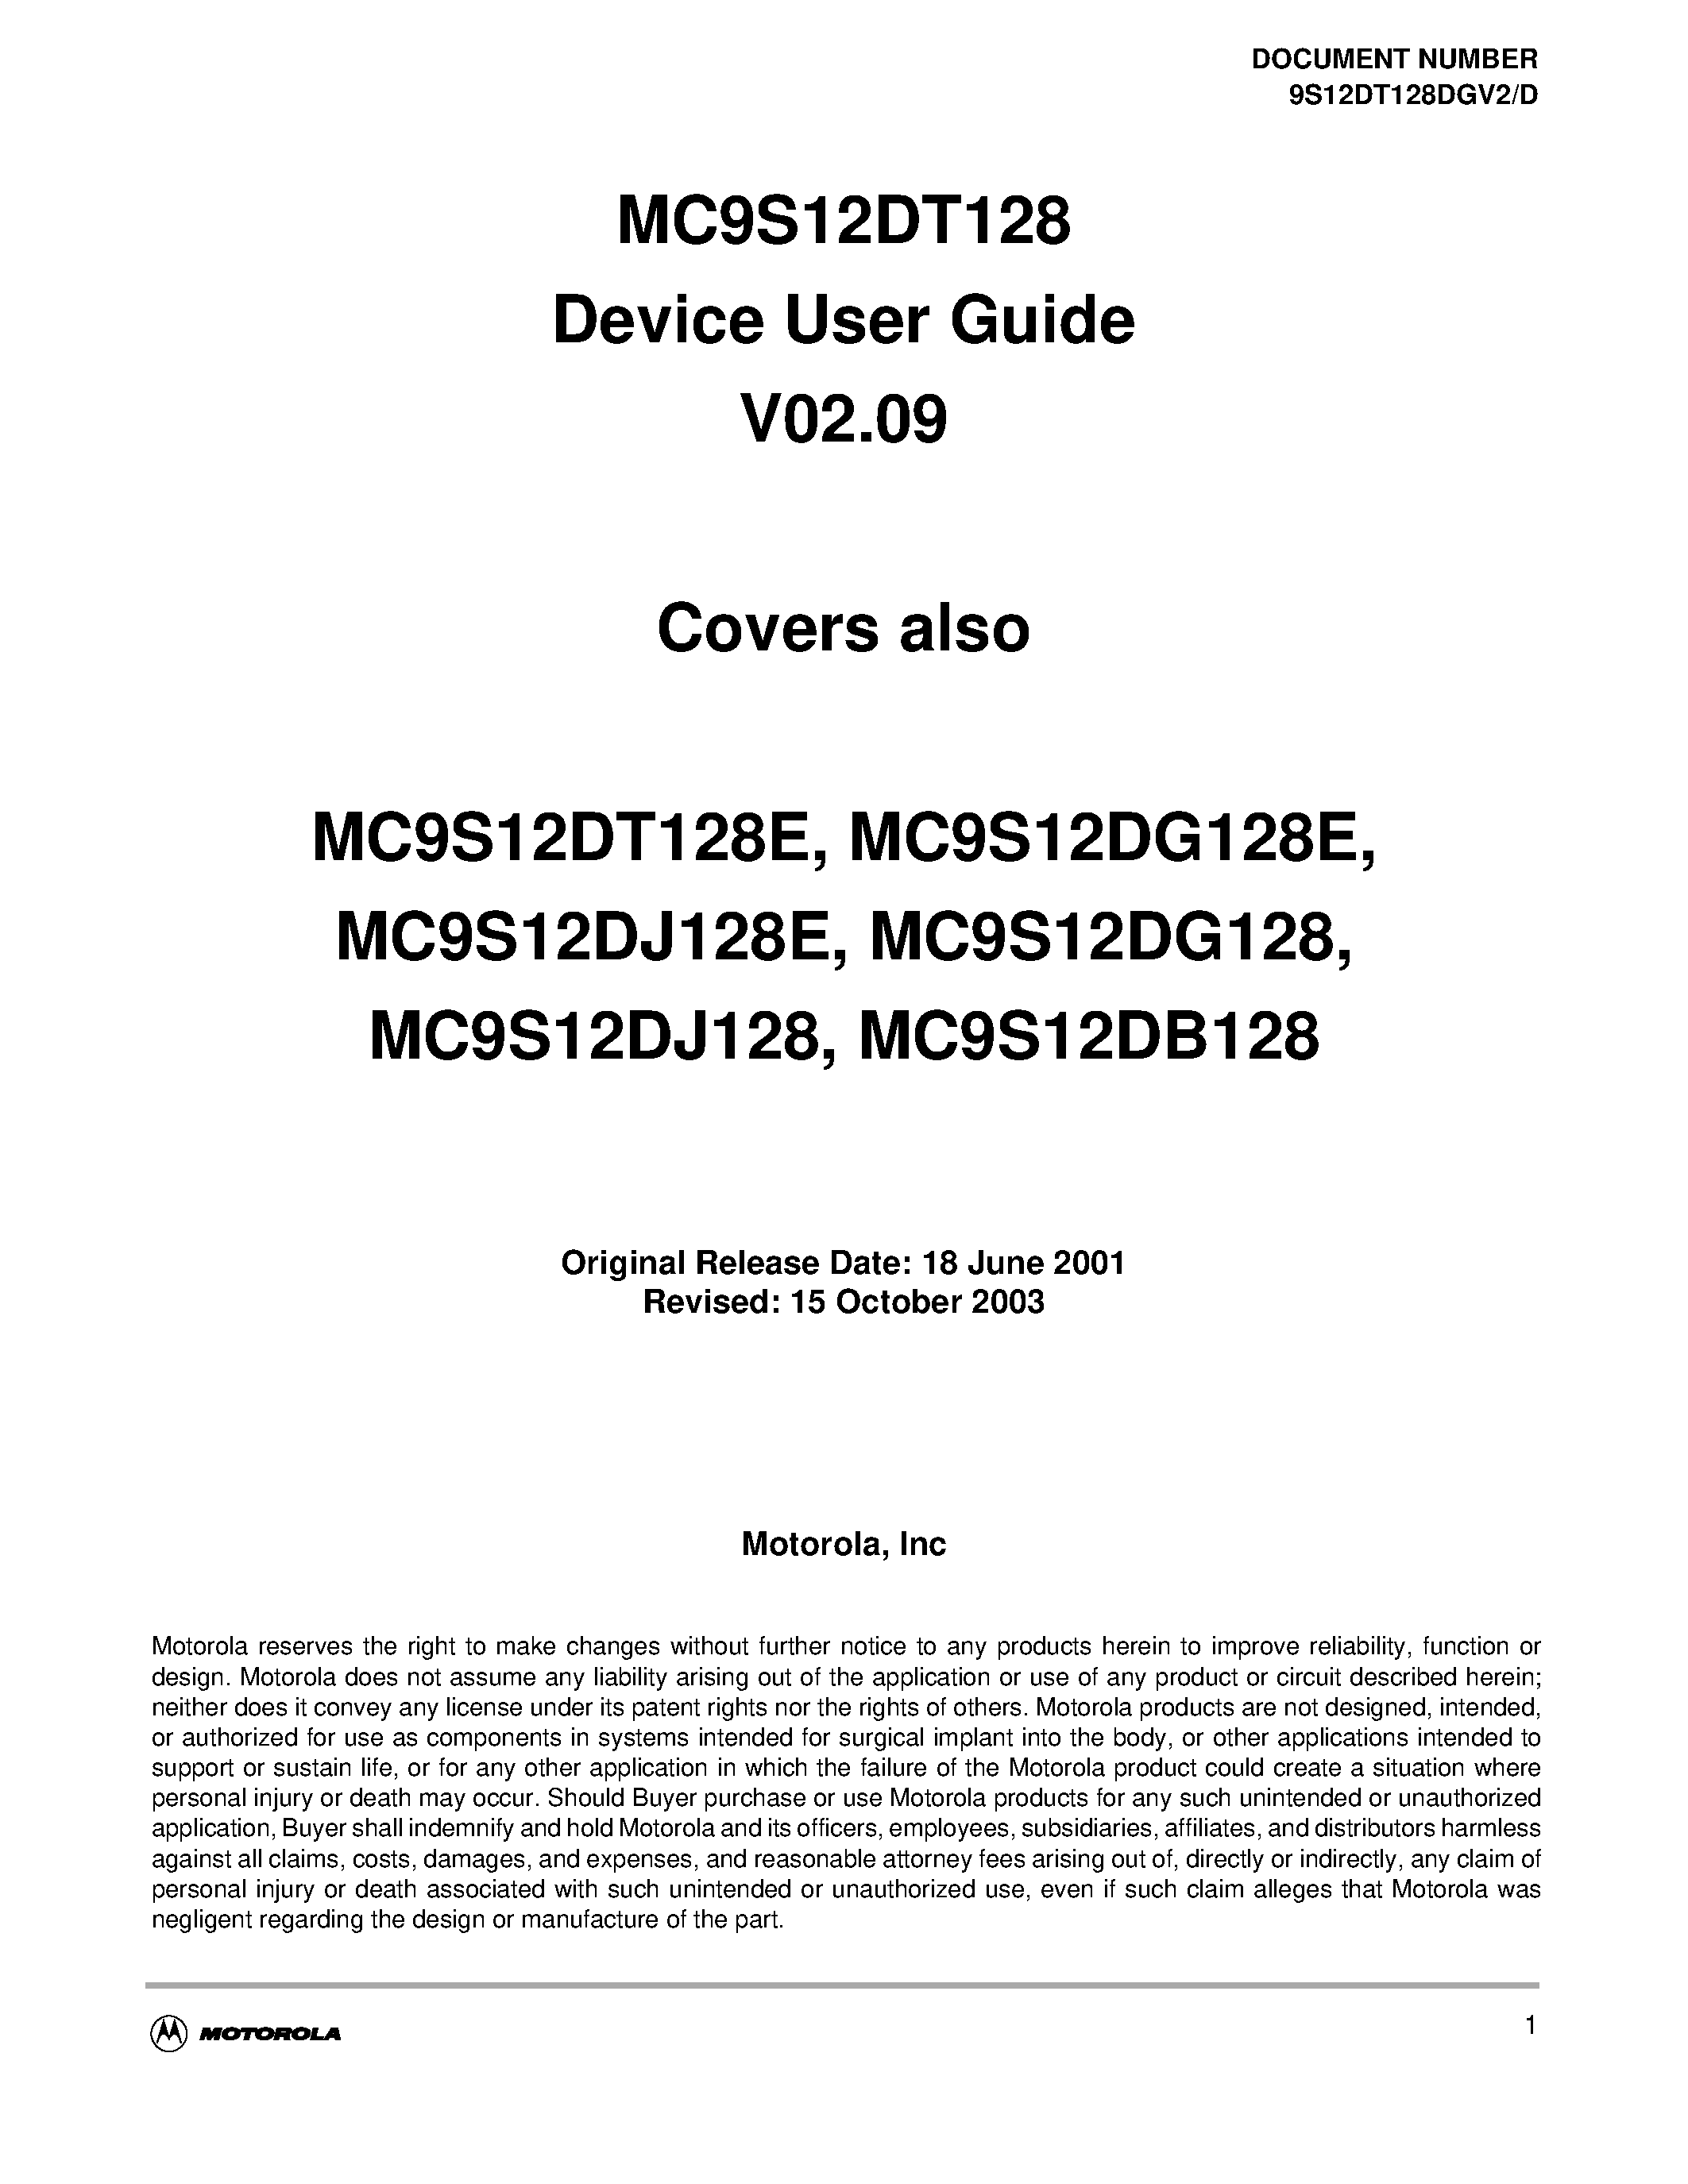 Даташит S12CRGV4D - MC9S12DT128 Device User Guide V02.09 страница 1